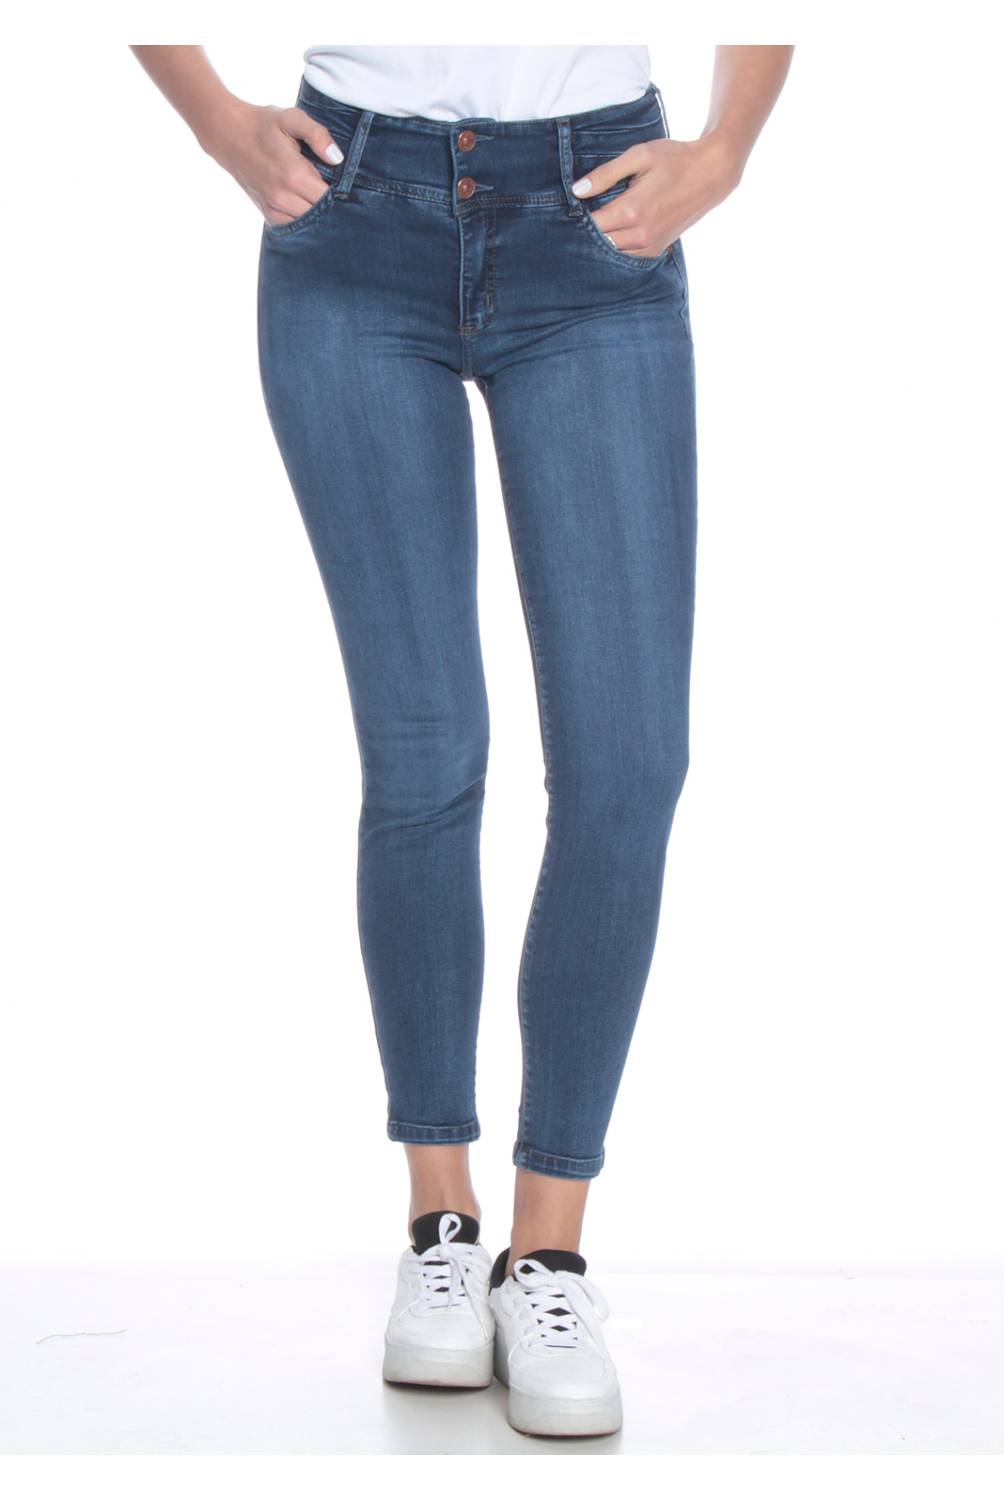 WADOS - Wados Jeans Skinny Tiro Alto Mujer